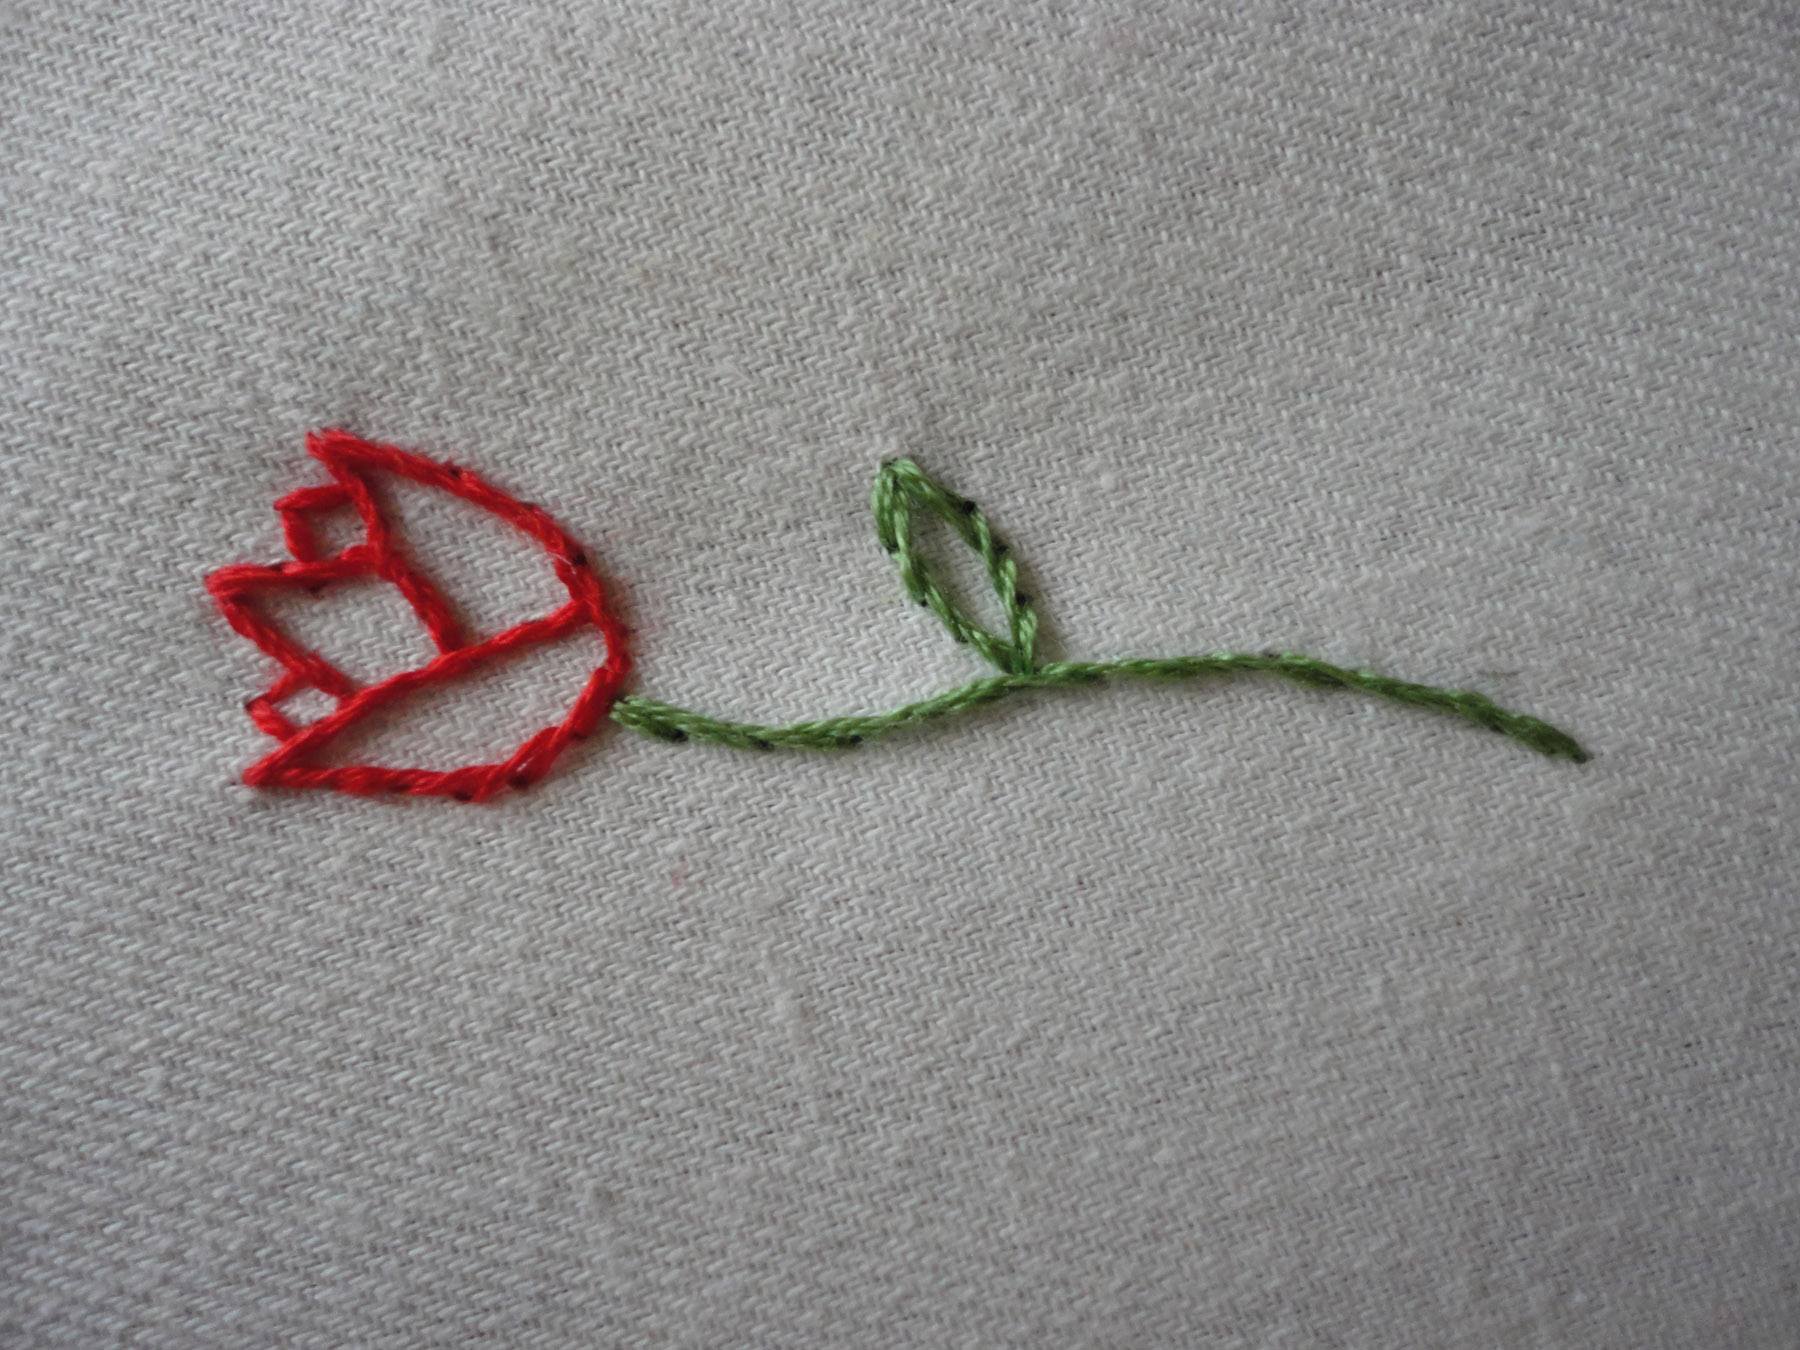 embroidery stitches tutorial pdf